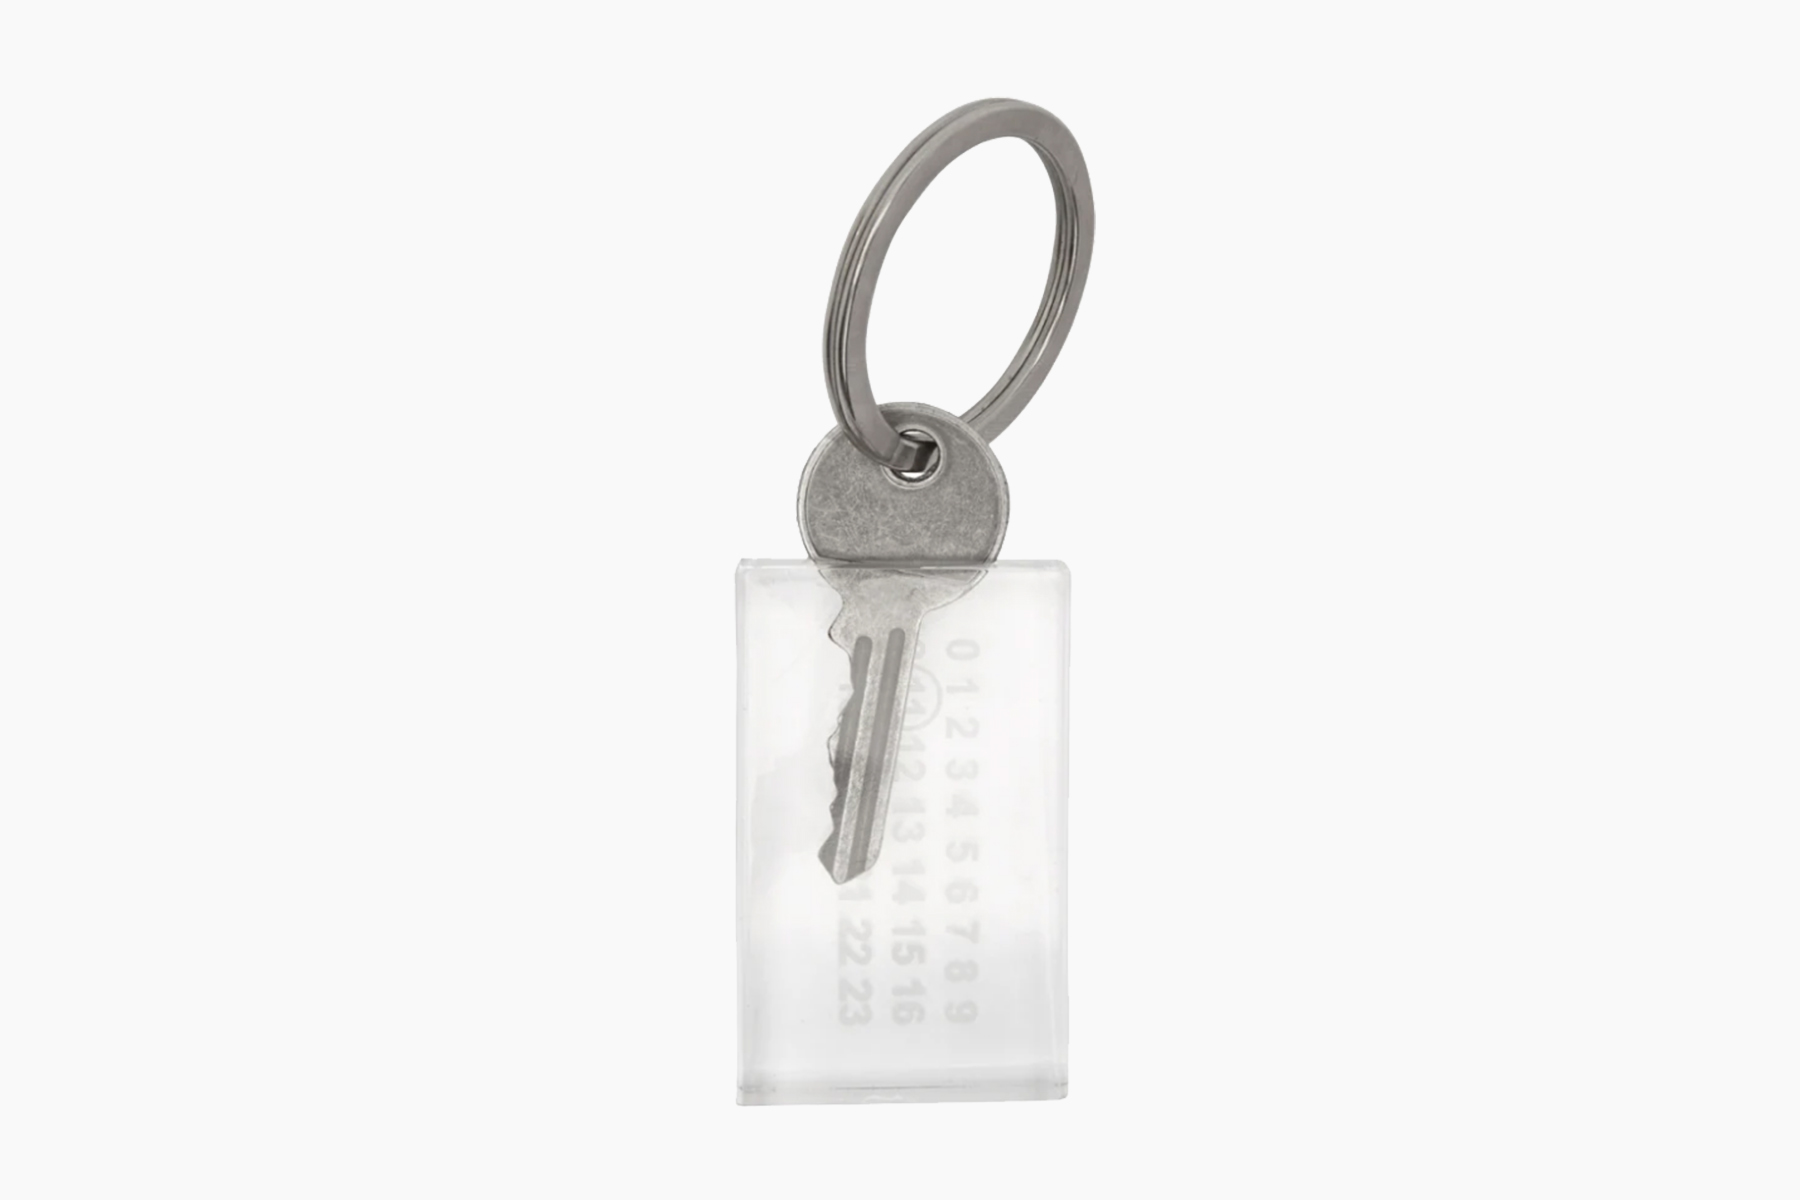 Maison Margiela SSENSE Exclusive Silver Keychain | Drops | Hypebeast